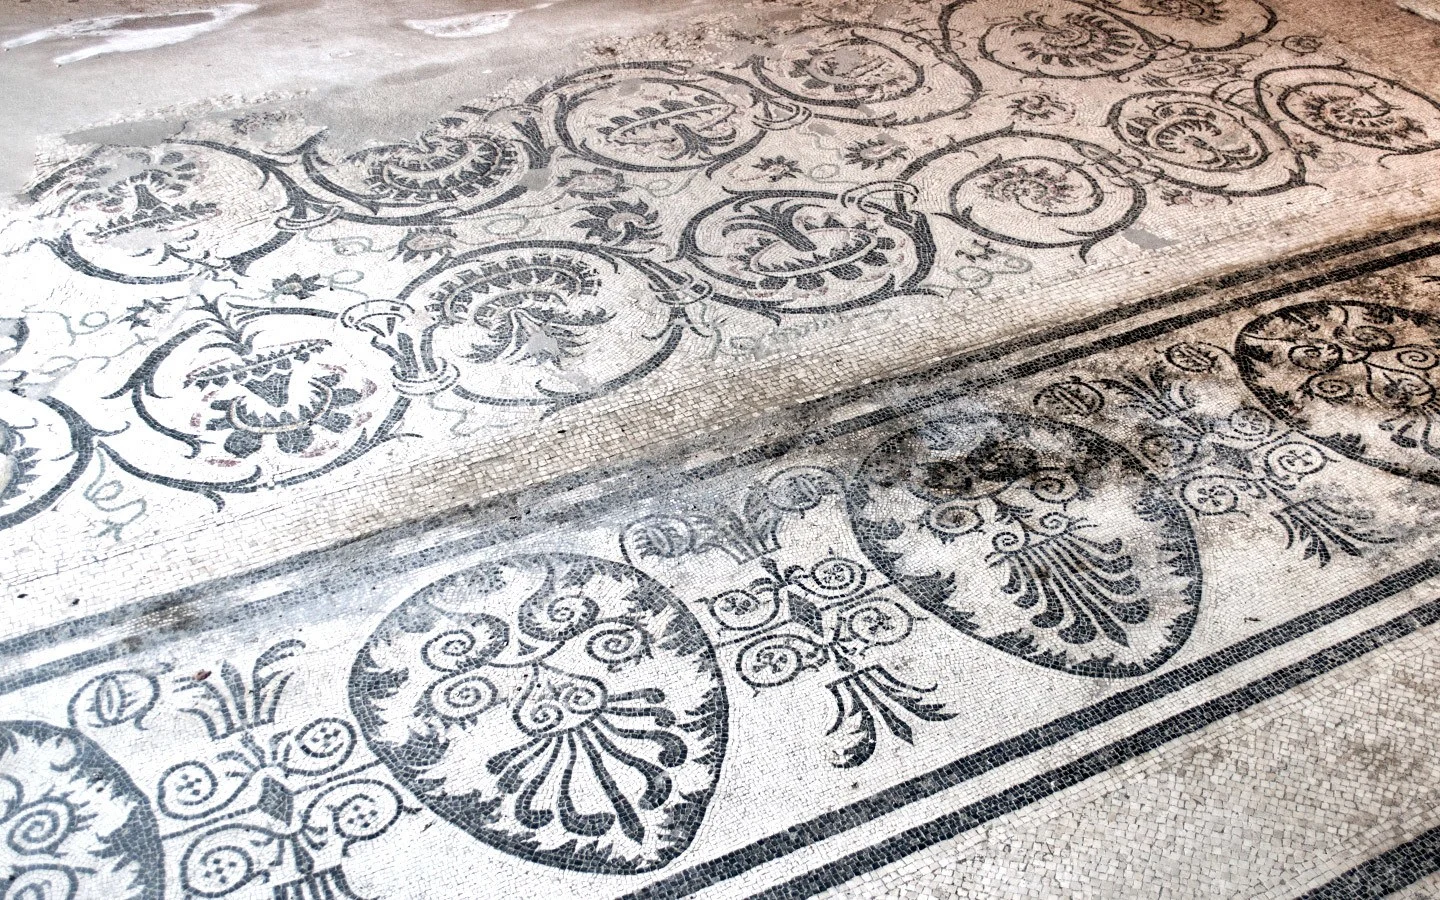 Pompeii mosaics